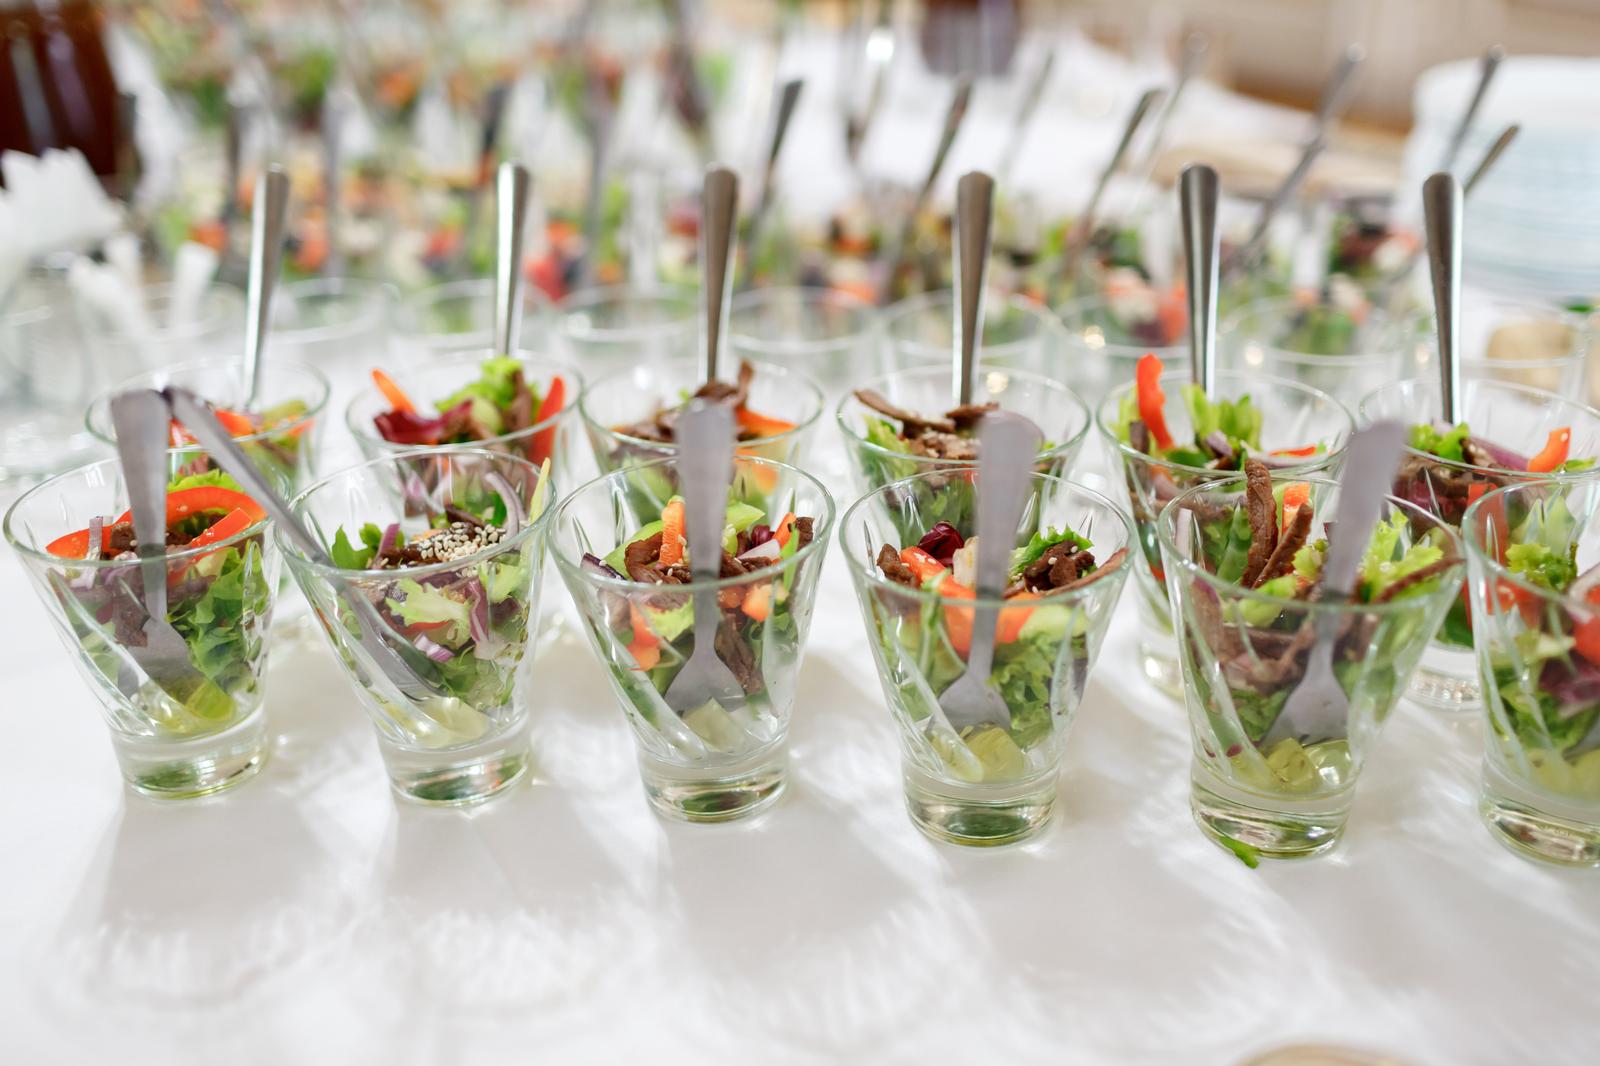 VARRAS OÜ - Event catering activities in Estonia